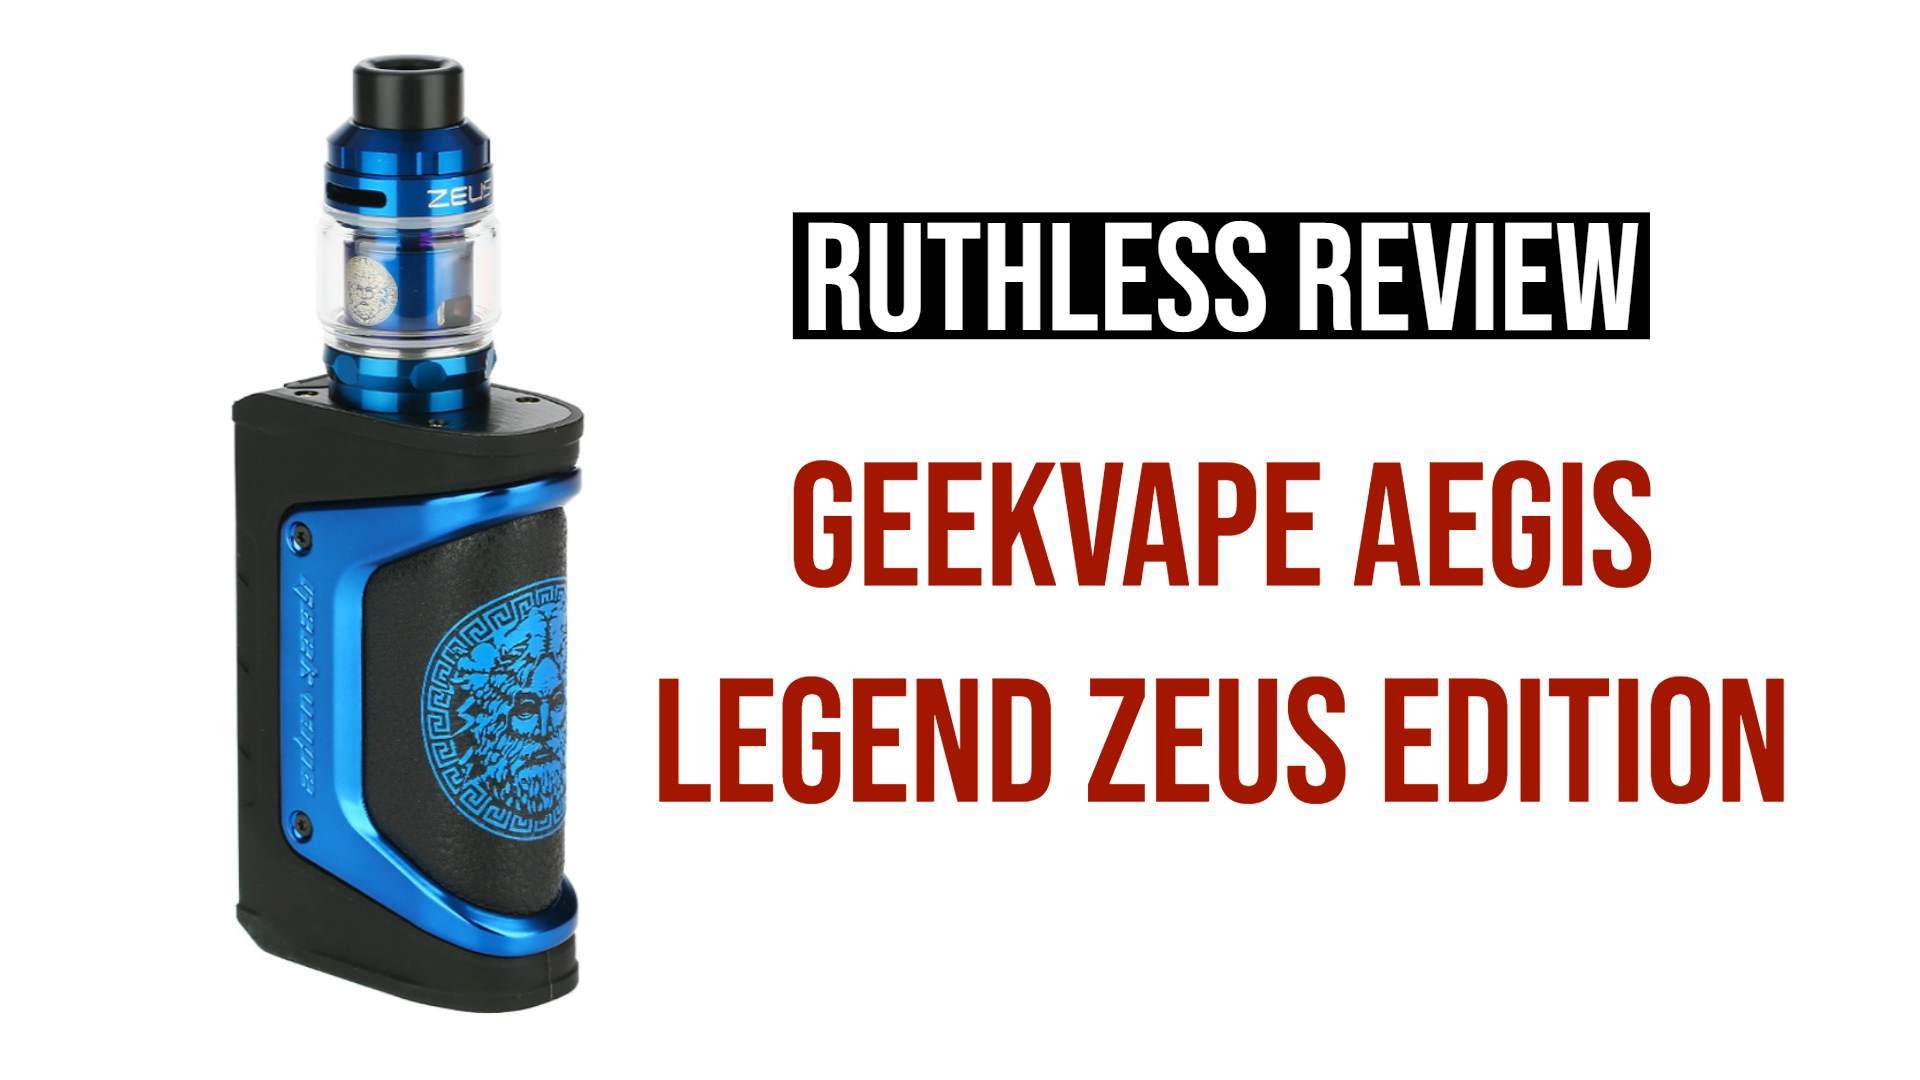 Product Review: Geekvape Aegis Legend Zeus Limited Edition